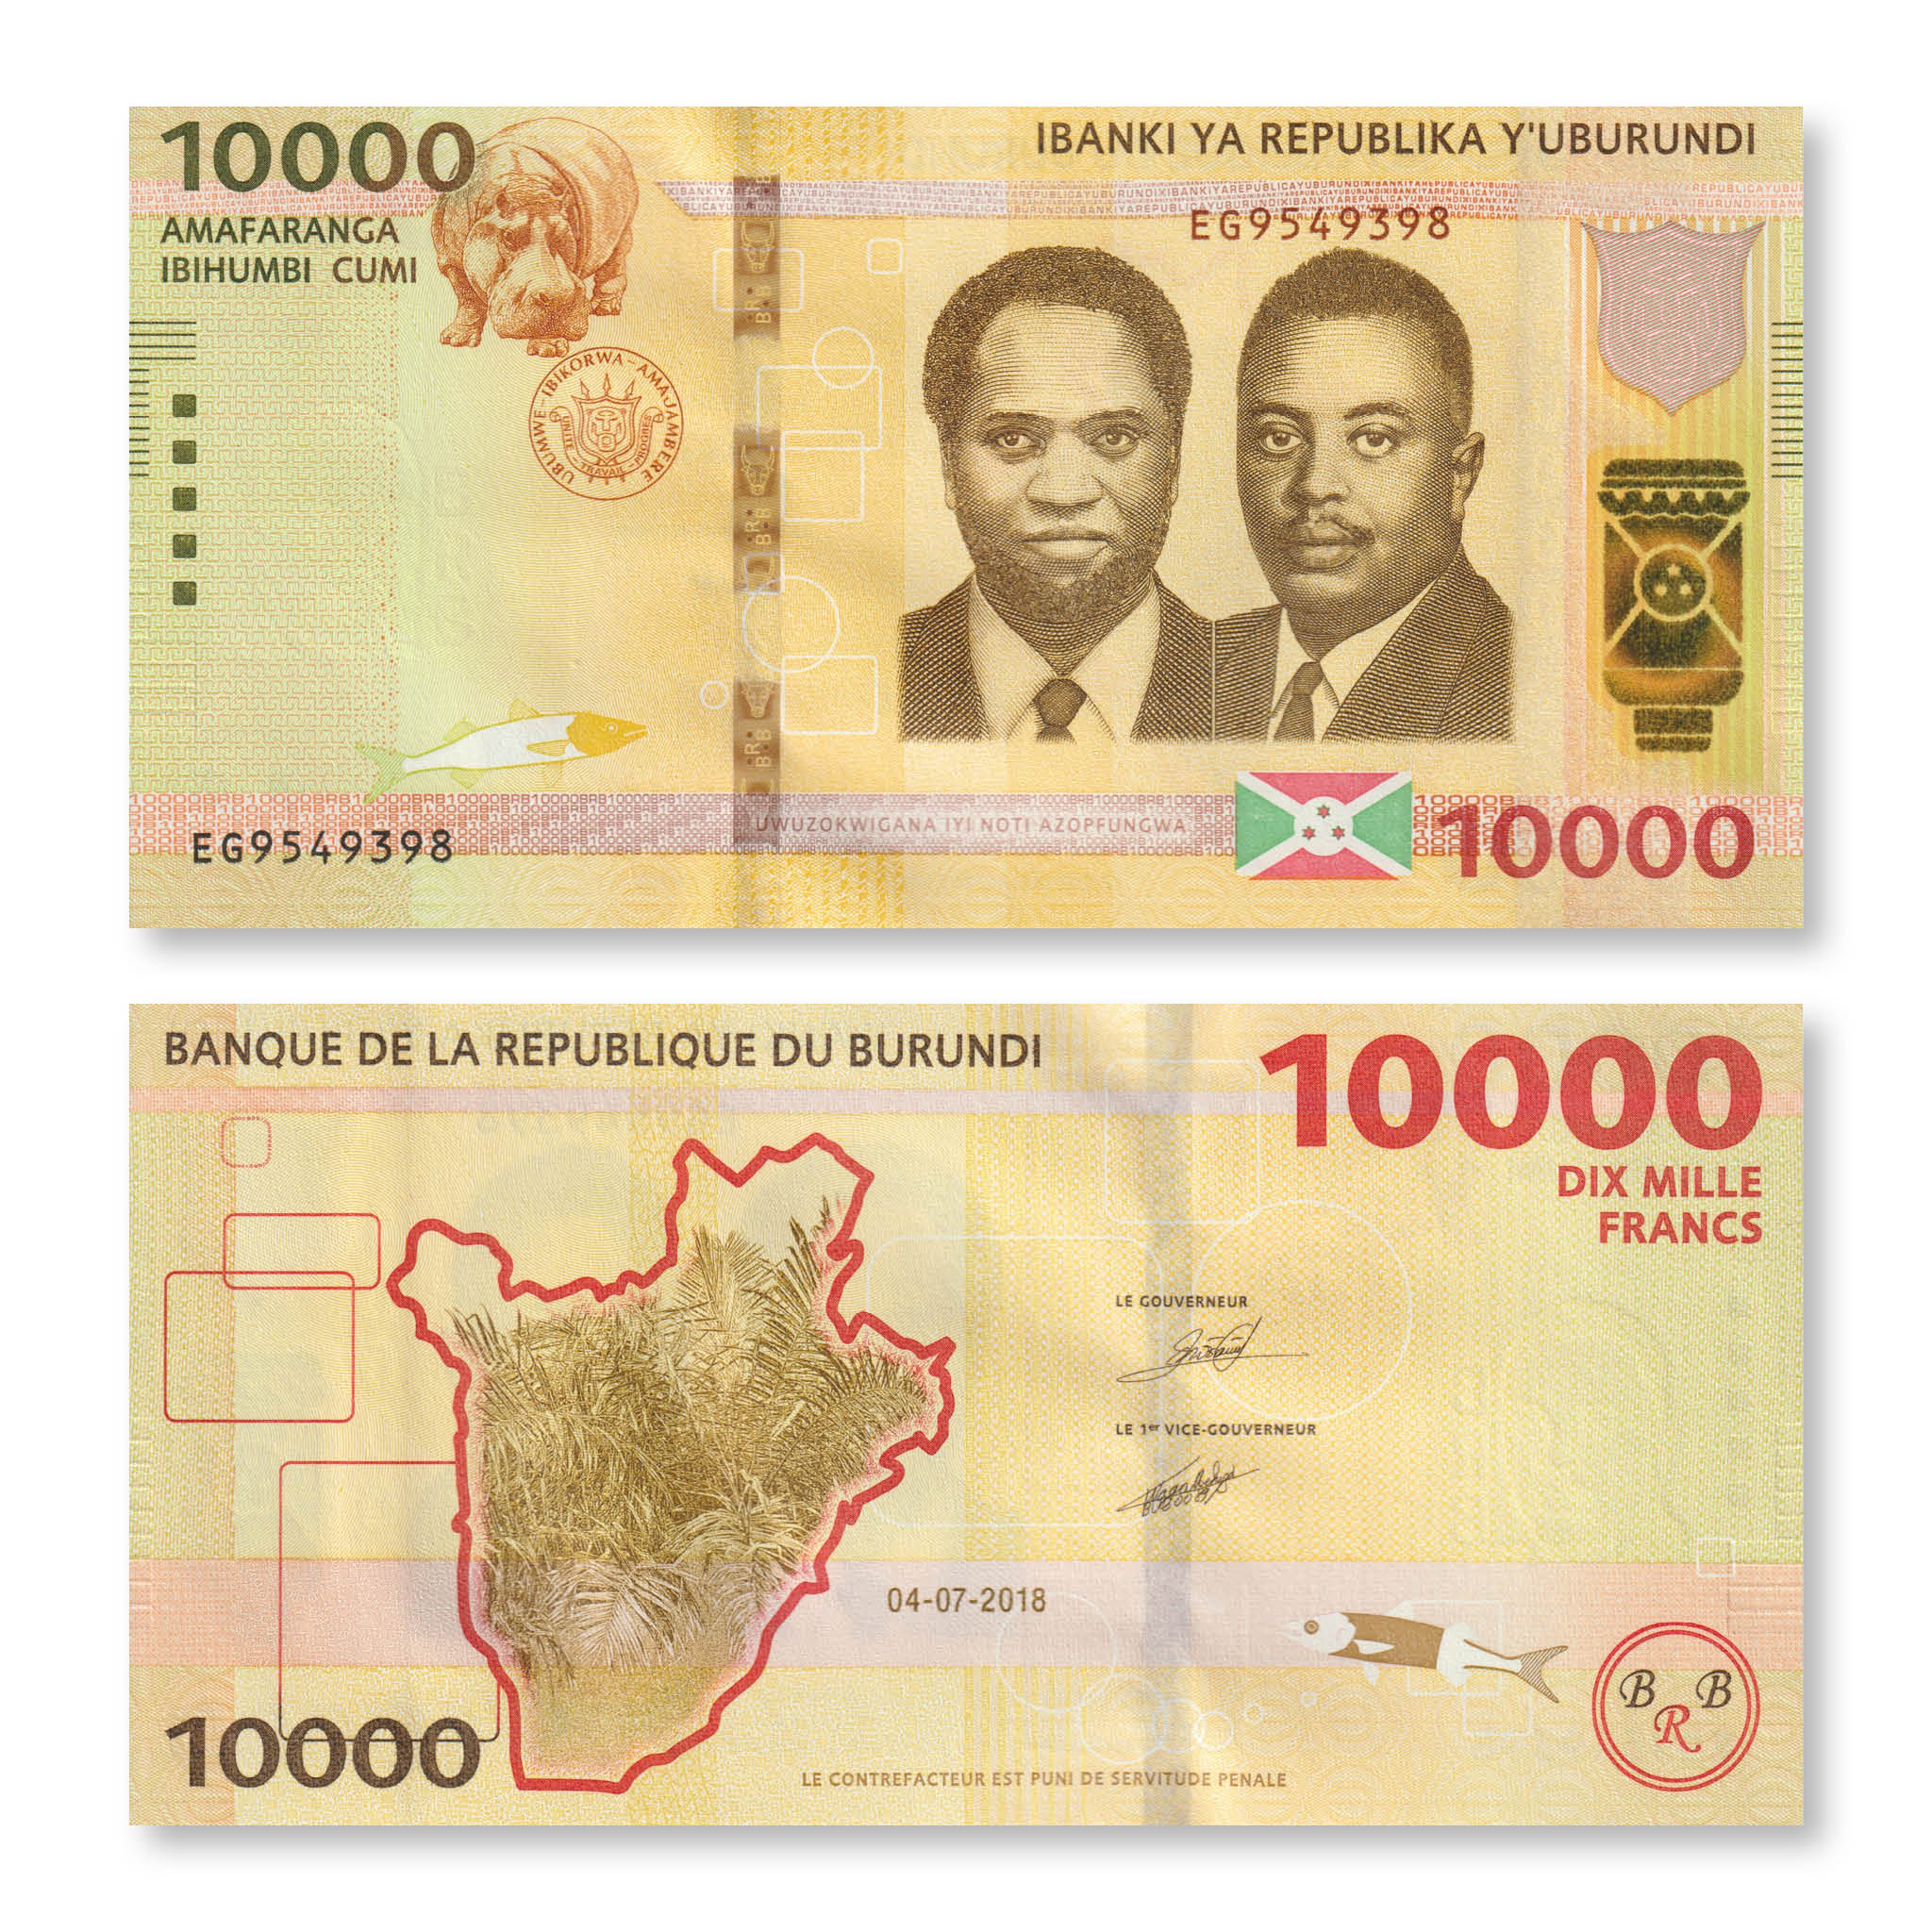 Burundi 10000 Francs, 2018, B240b, P54, UNC - Robert's World Money - World Banknotes